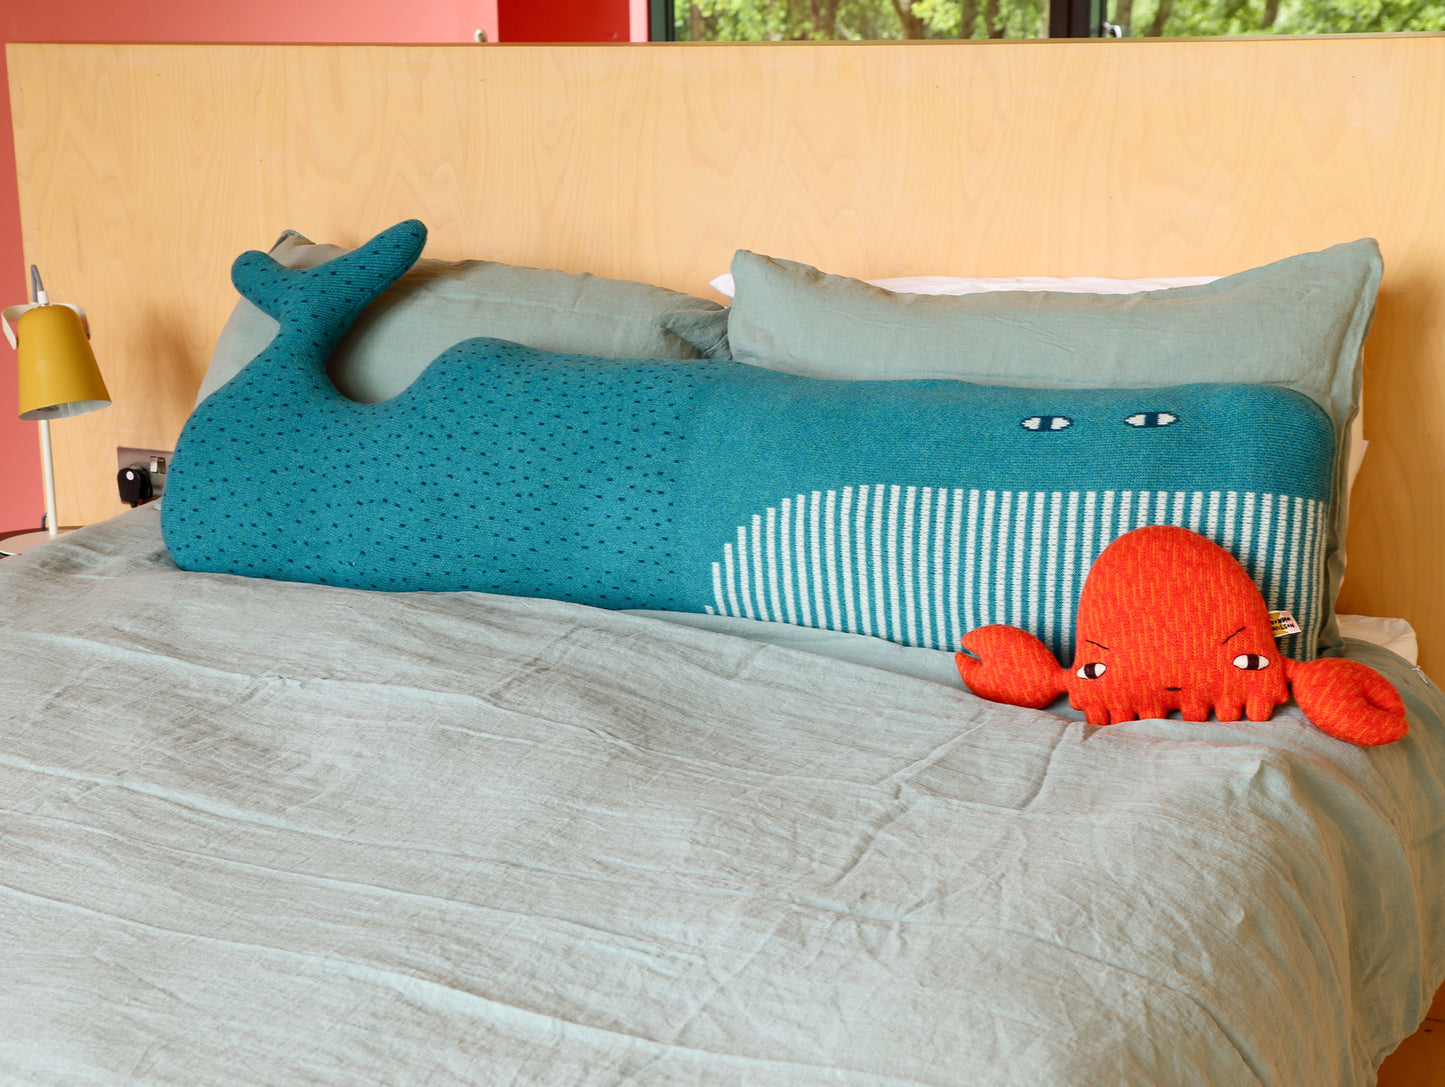 Whale Bolster Cushion by Donna Wilson